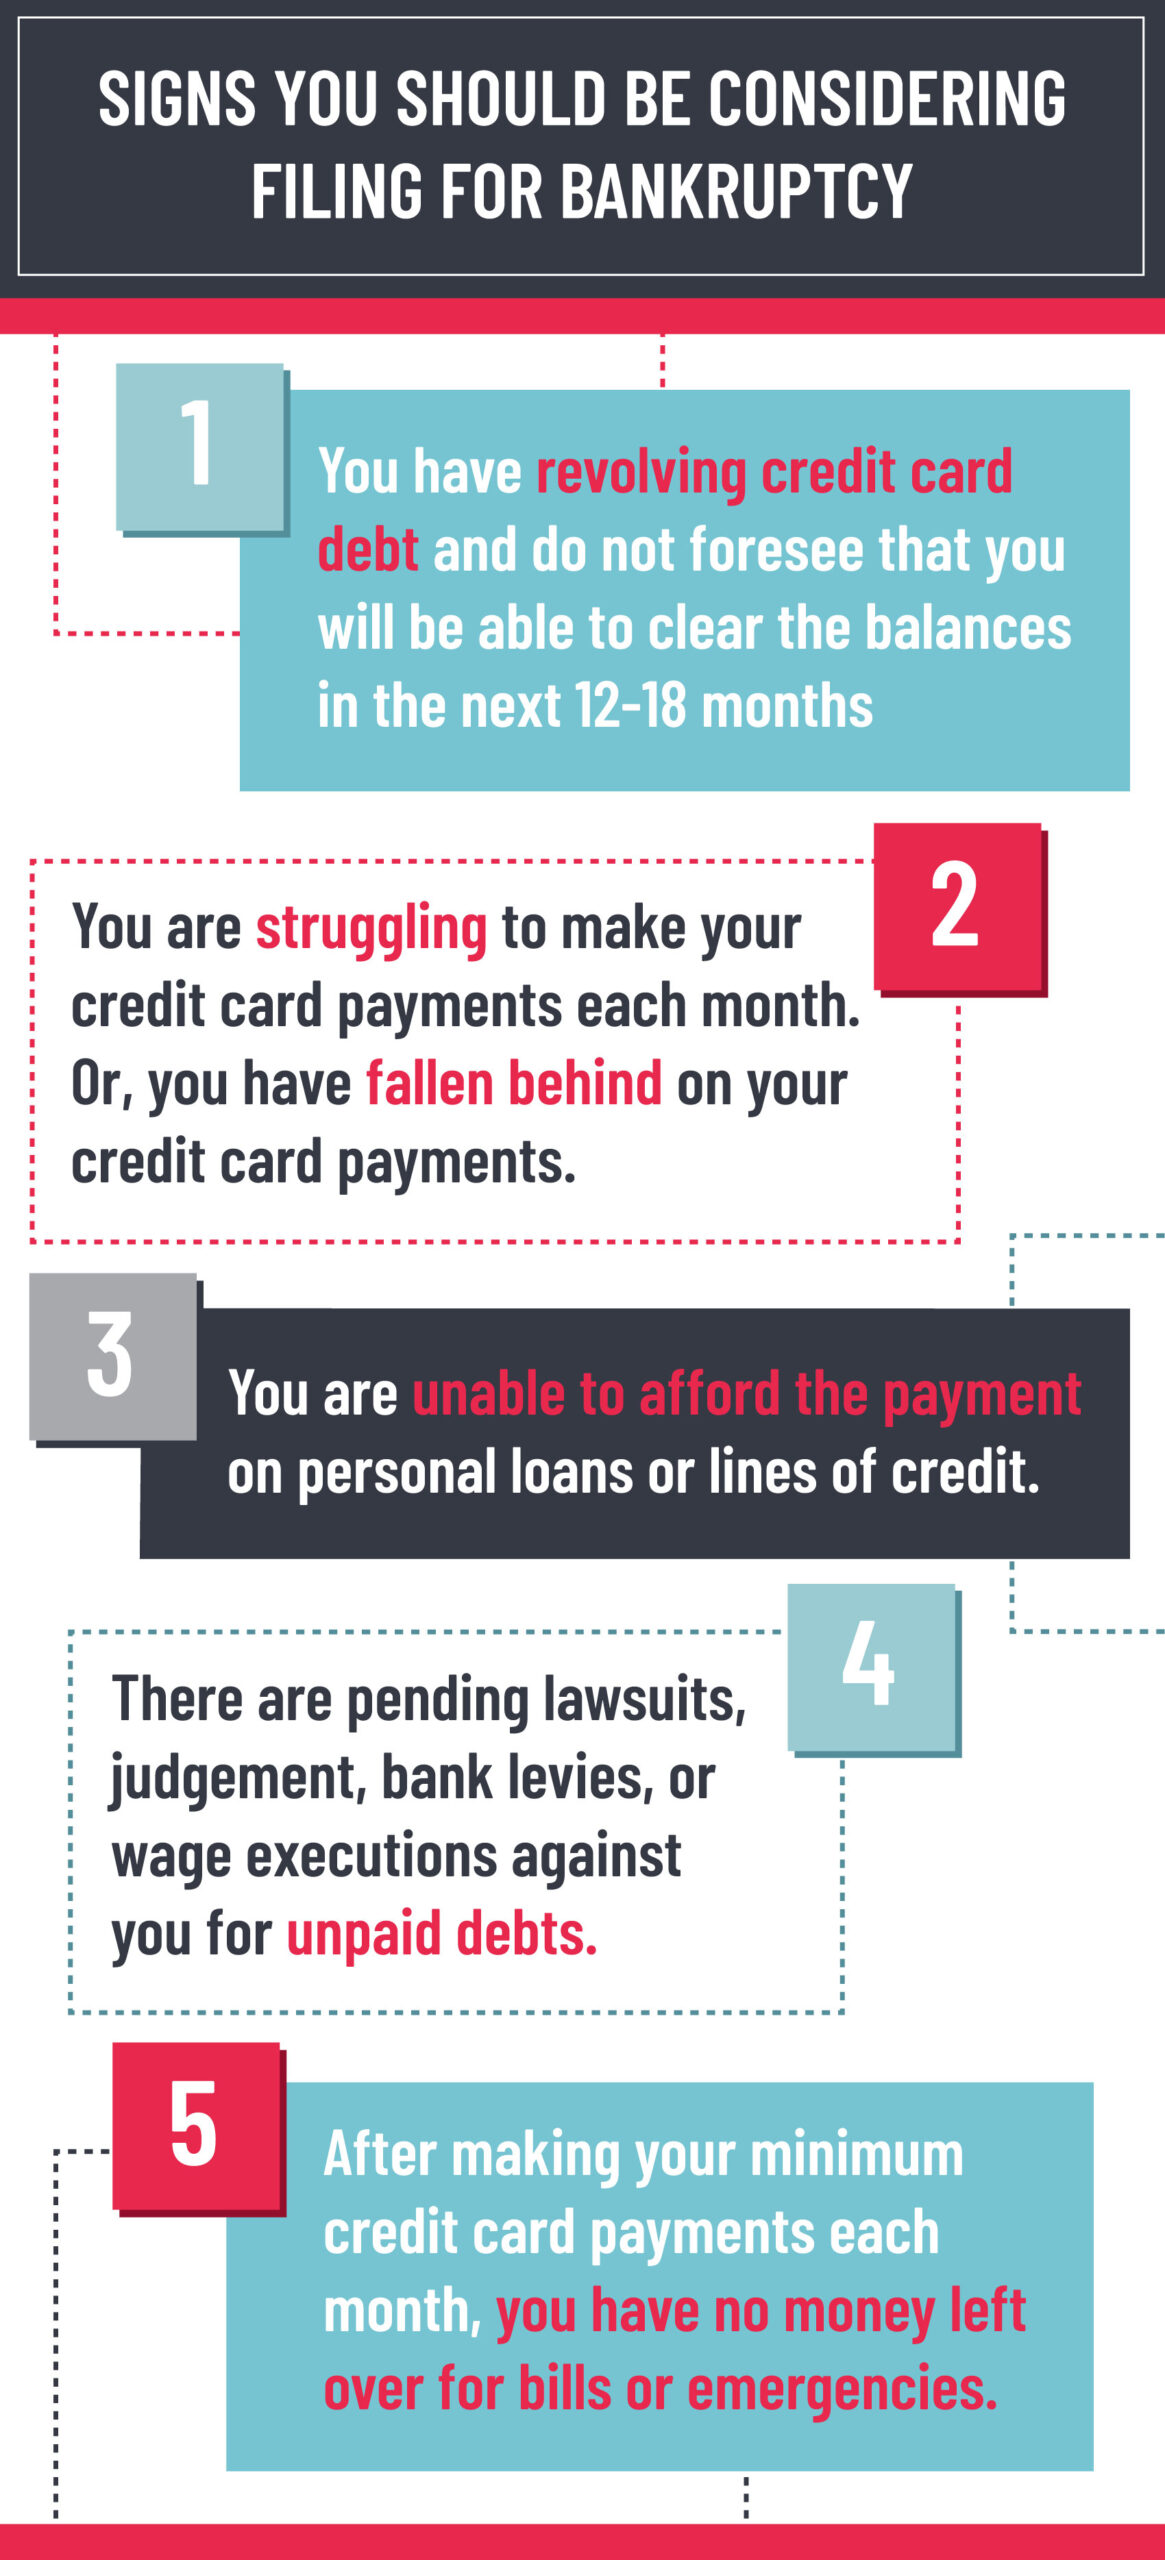 5 Signs You Should Consider Filing Bankruptcy